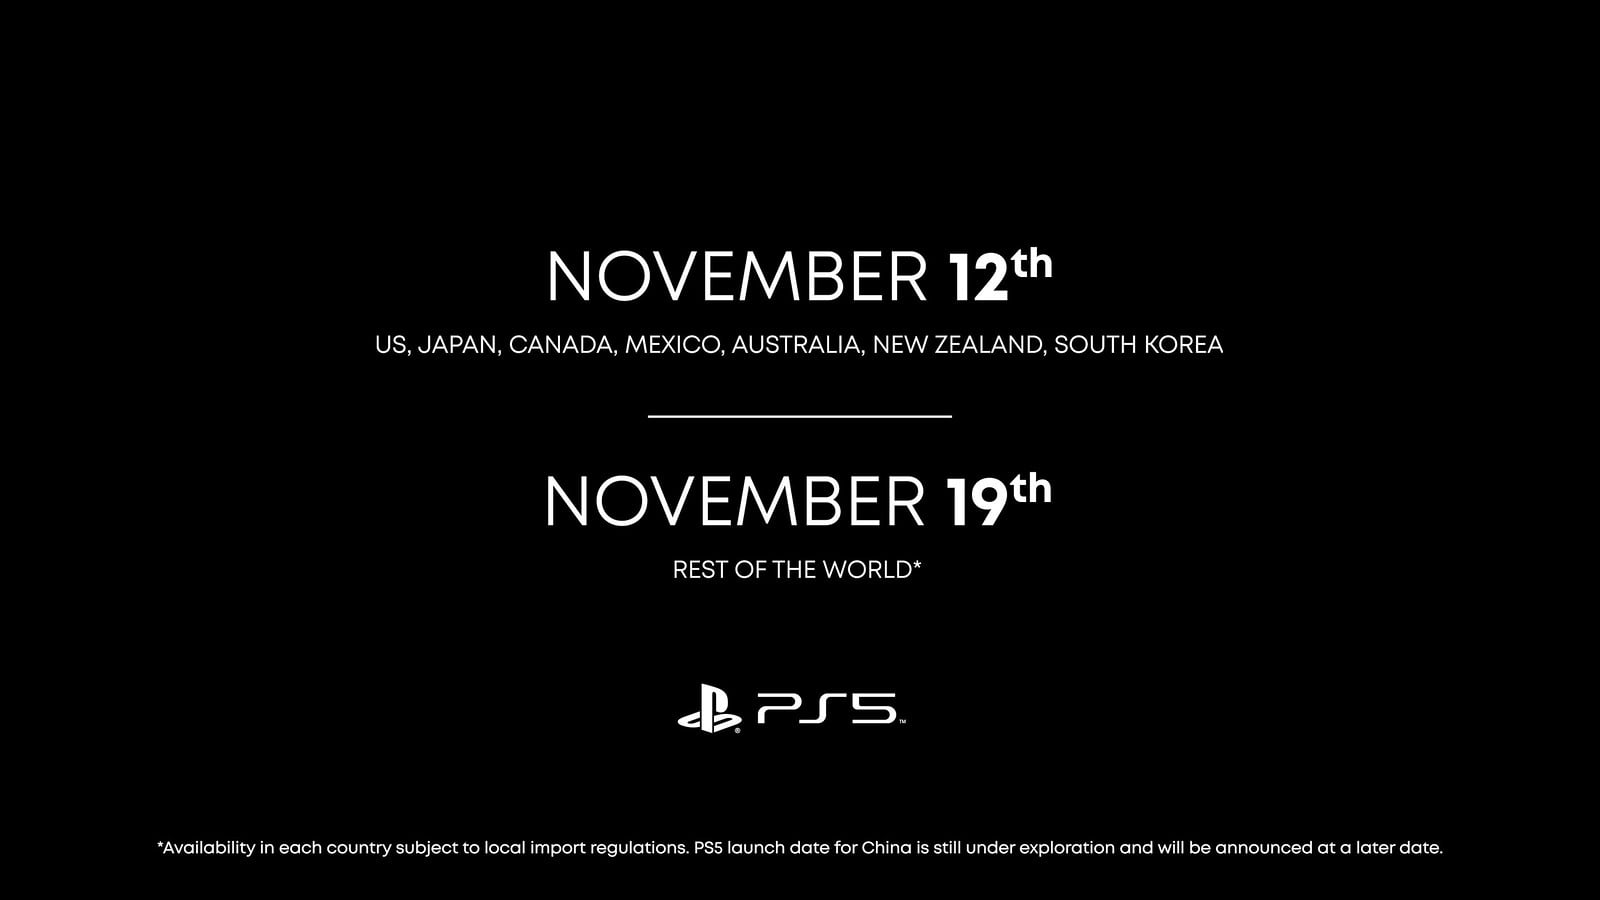 Playstation 5 chegará dia 19 de novembro no brasil | 1a5ab3e2 50350391692 b2c6a93a67 h | married games notícias | playstation 5, sony | playstation 5